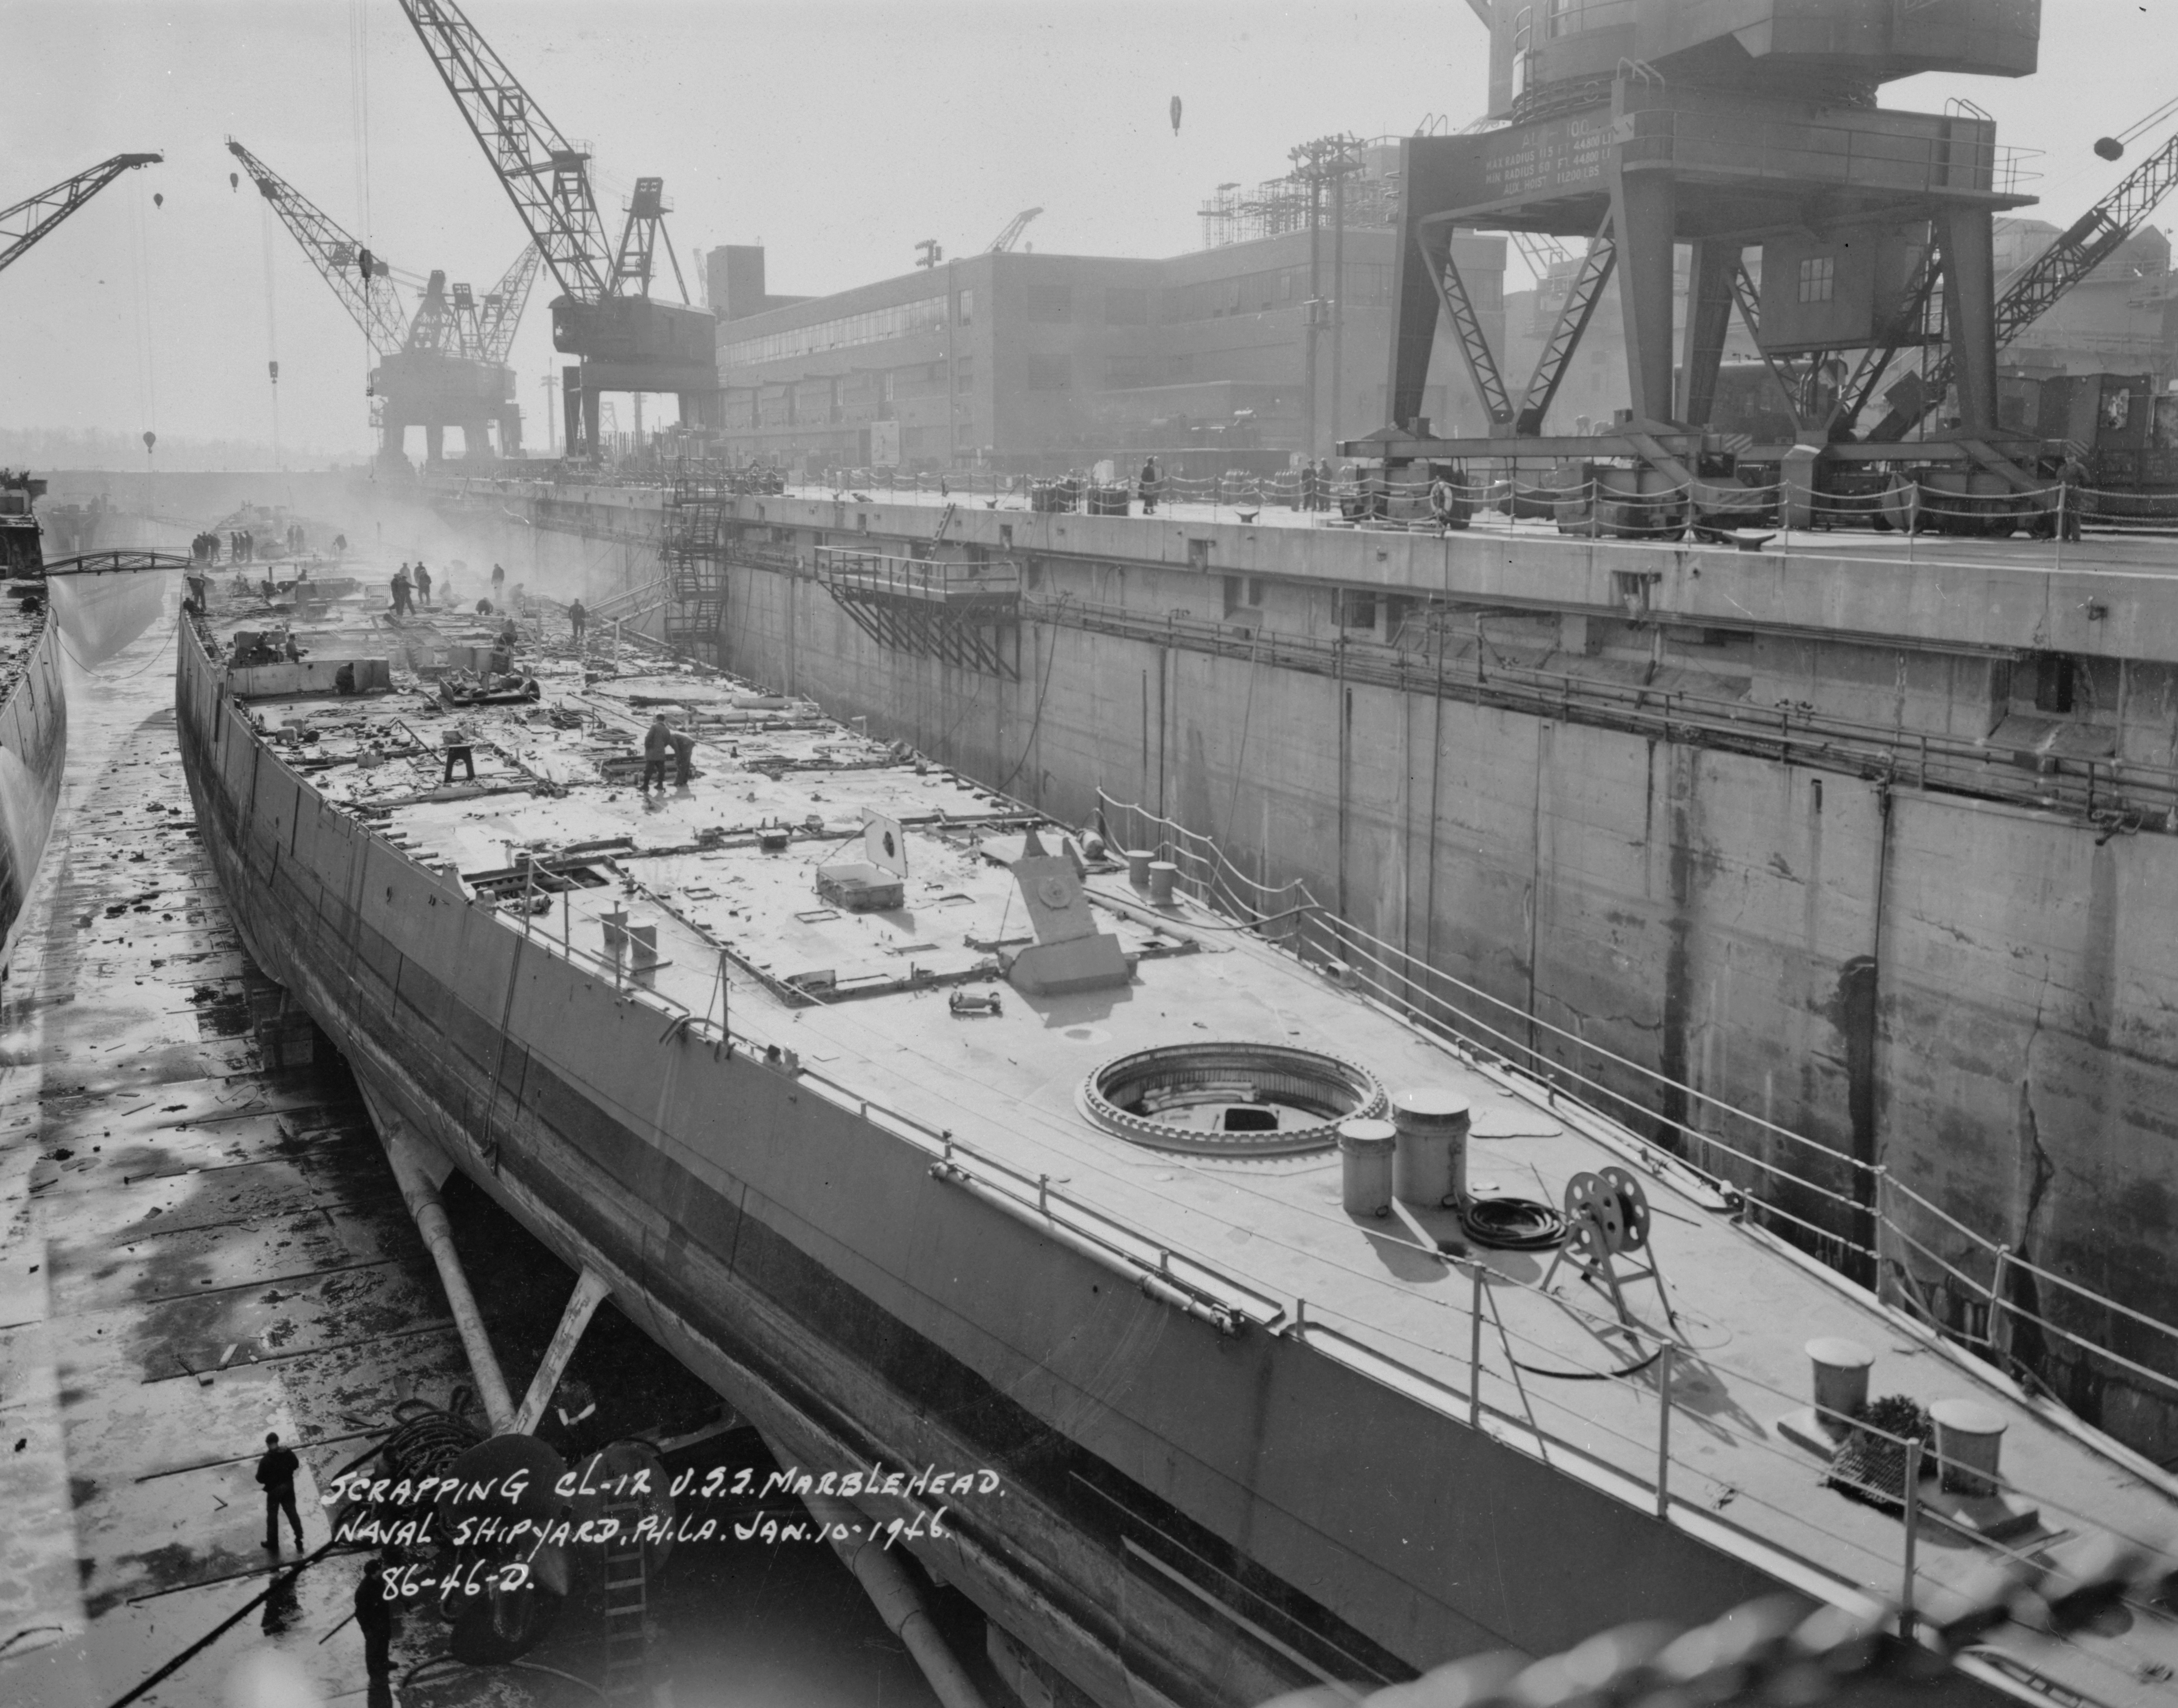 Scrapping of Marblehead in Dry Dock No. 4, Philadelphia Navy Yard, Philadelphia, Pennsylvania, United States, 10 Jan 1946